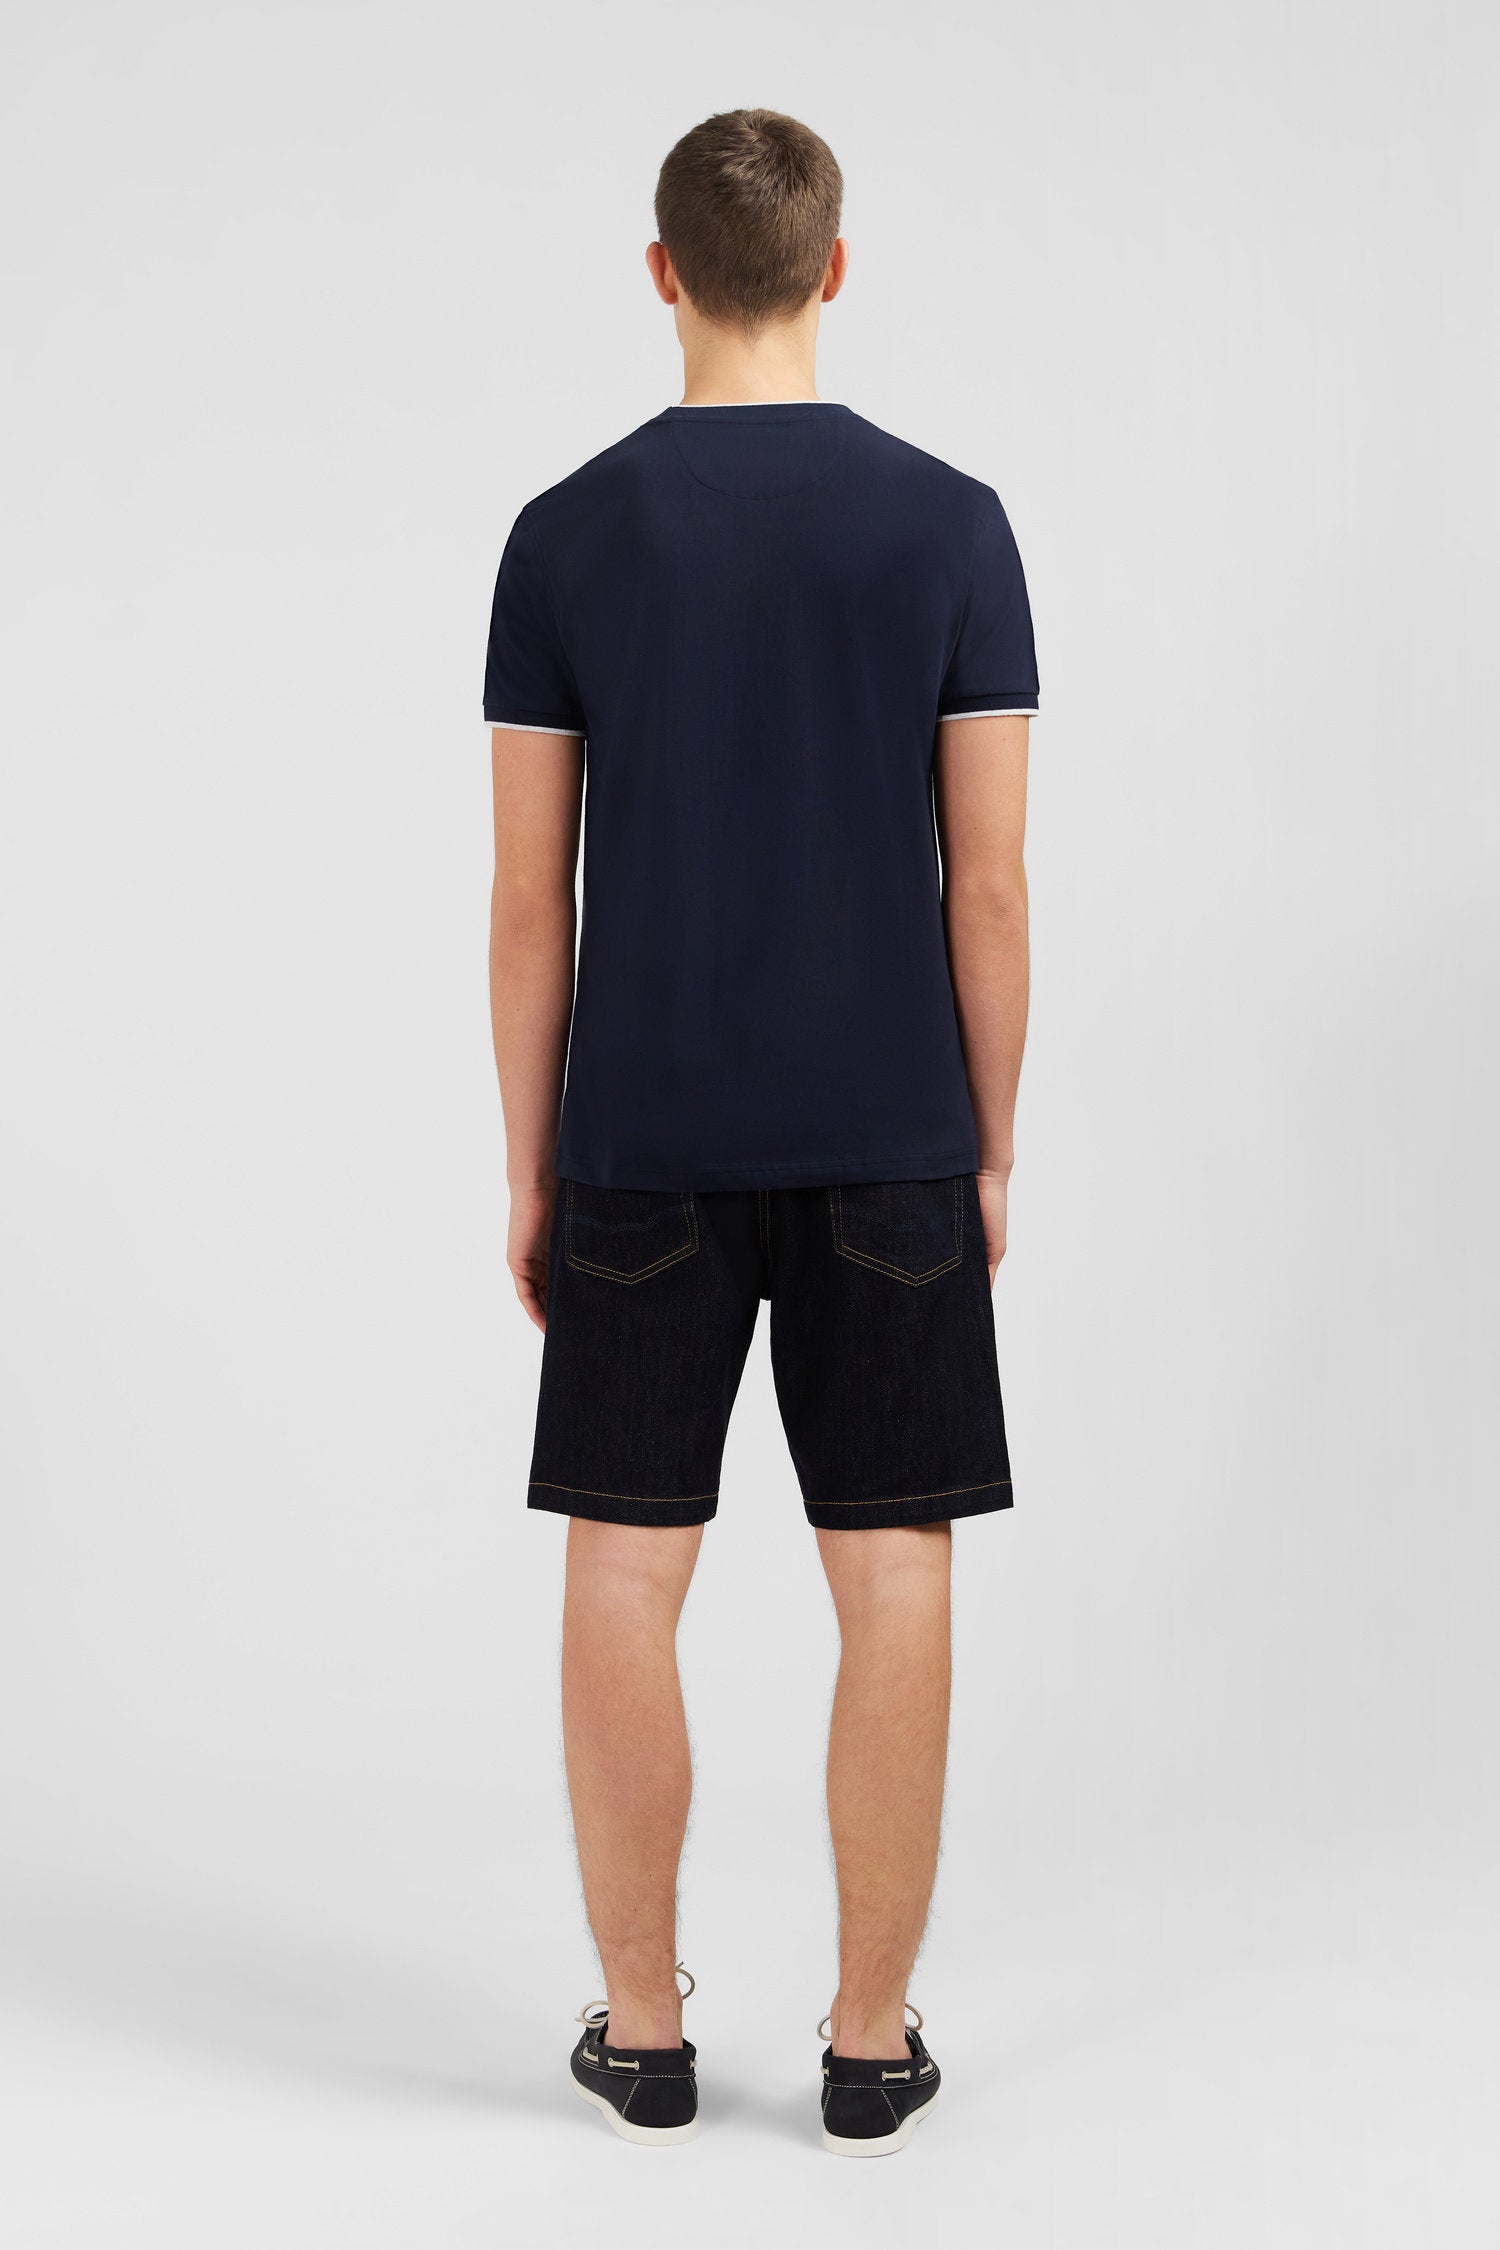 Plain Dark Blue Short-Sleeved T-Shirt_E24MAITC0010_BLF_03